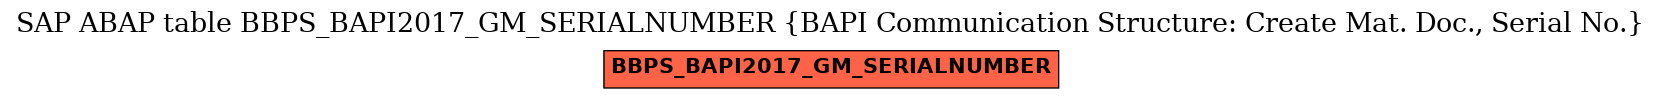 E-R Diagram for table BBPS_BAPI2017_GM_SERIALNUMBER (BAPI Communication Structure: Create Mat. Doc., Serial No.)